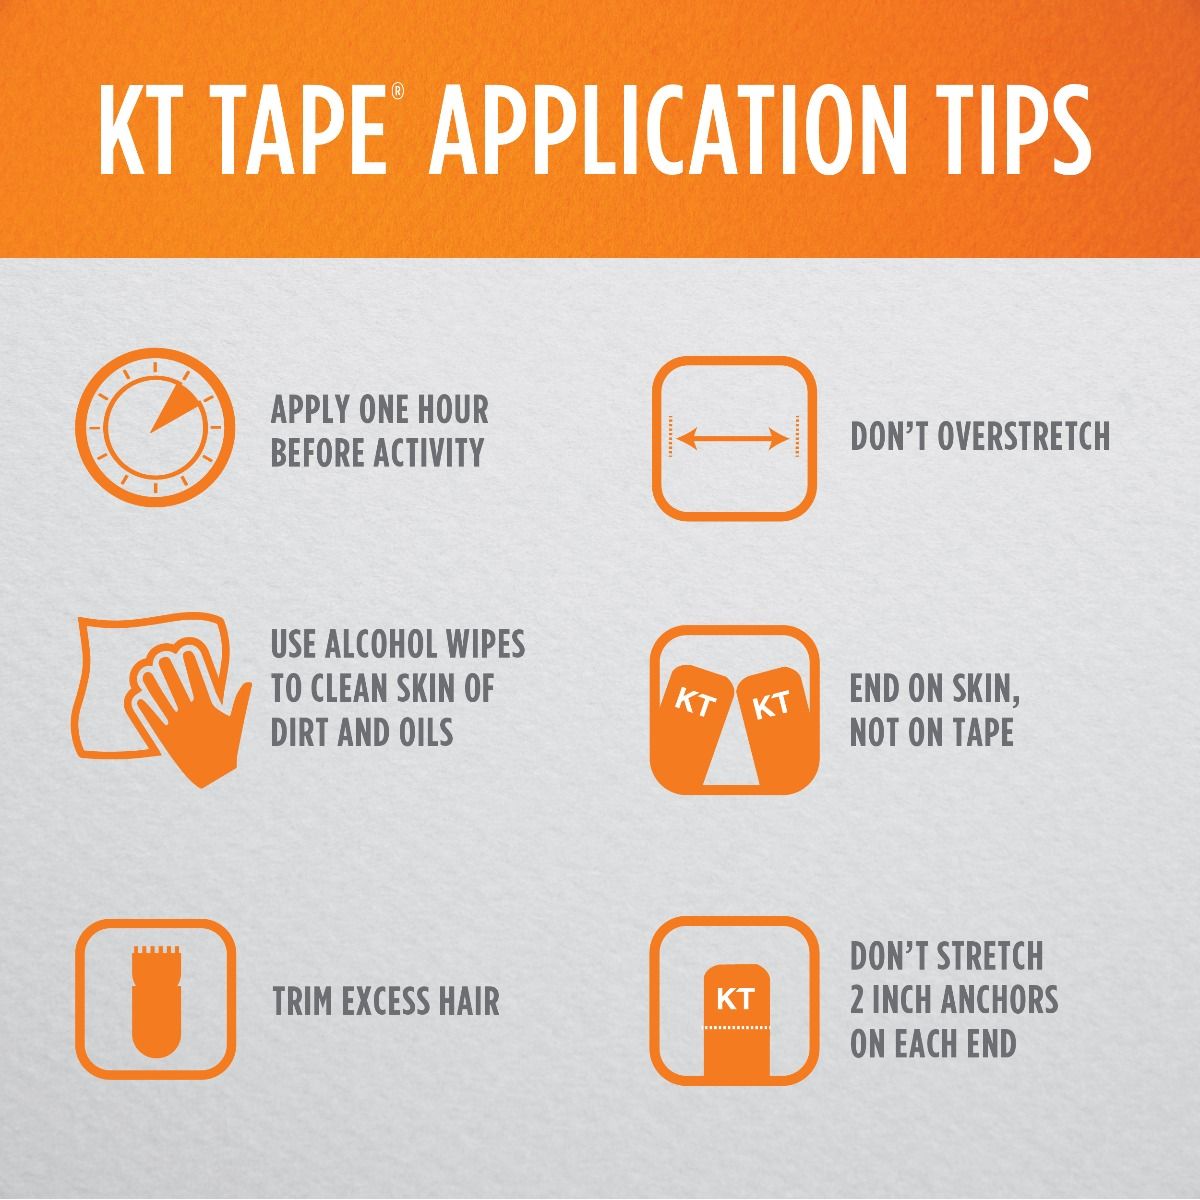 KT Tape Original Cotton 150 Strip 10" Precut